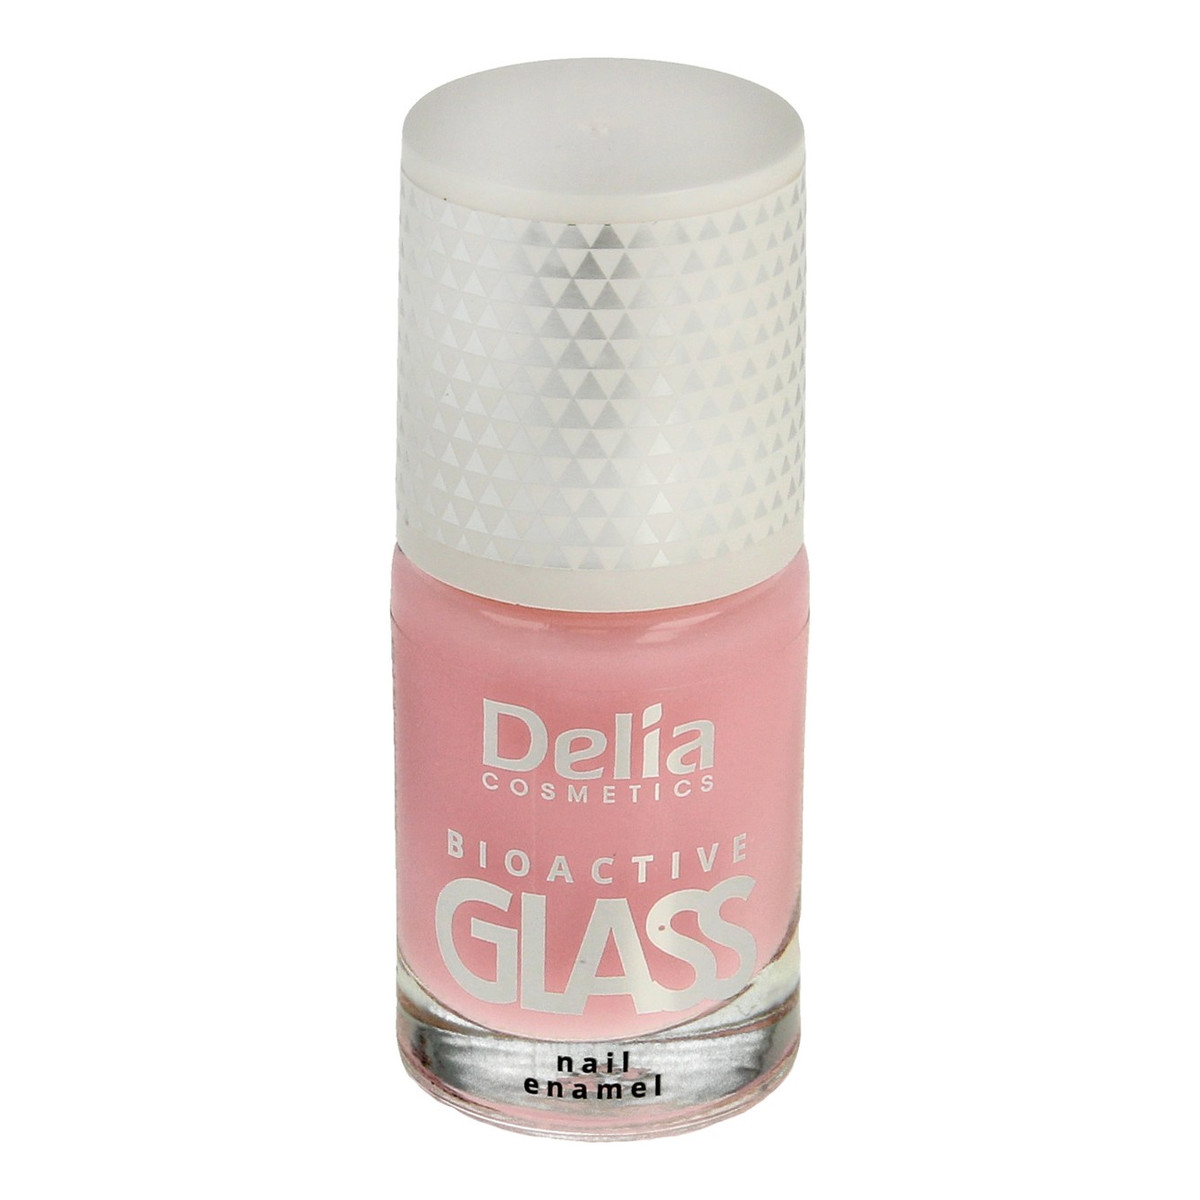 Delia Bioactive Glass Emalia do paznokci 11ml